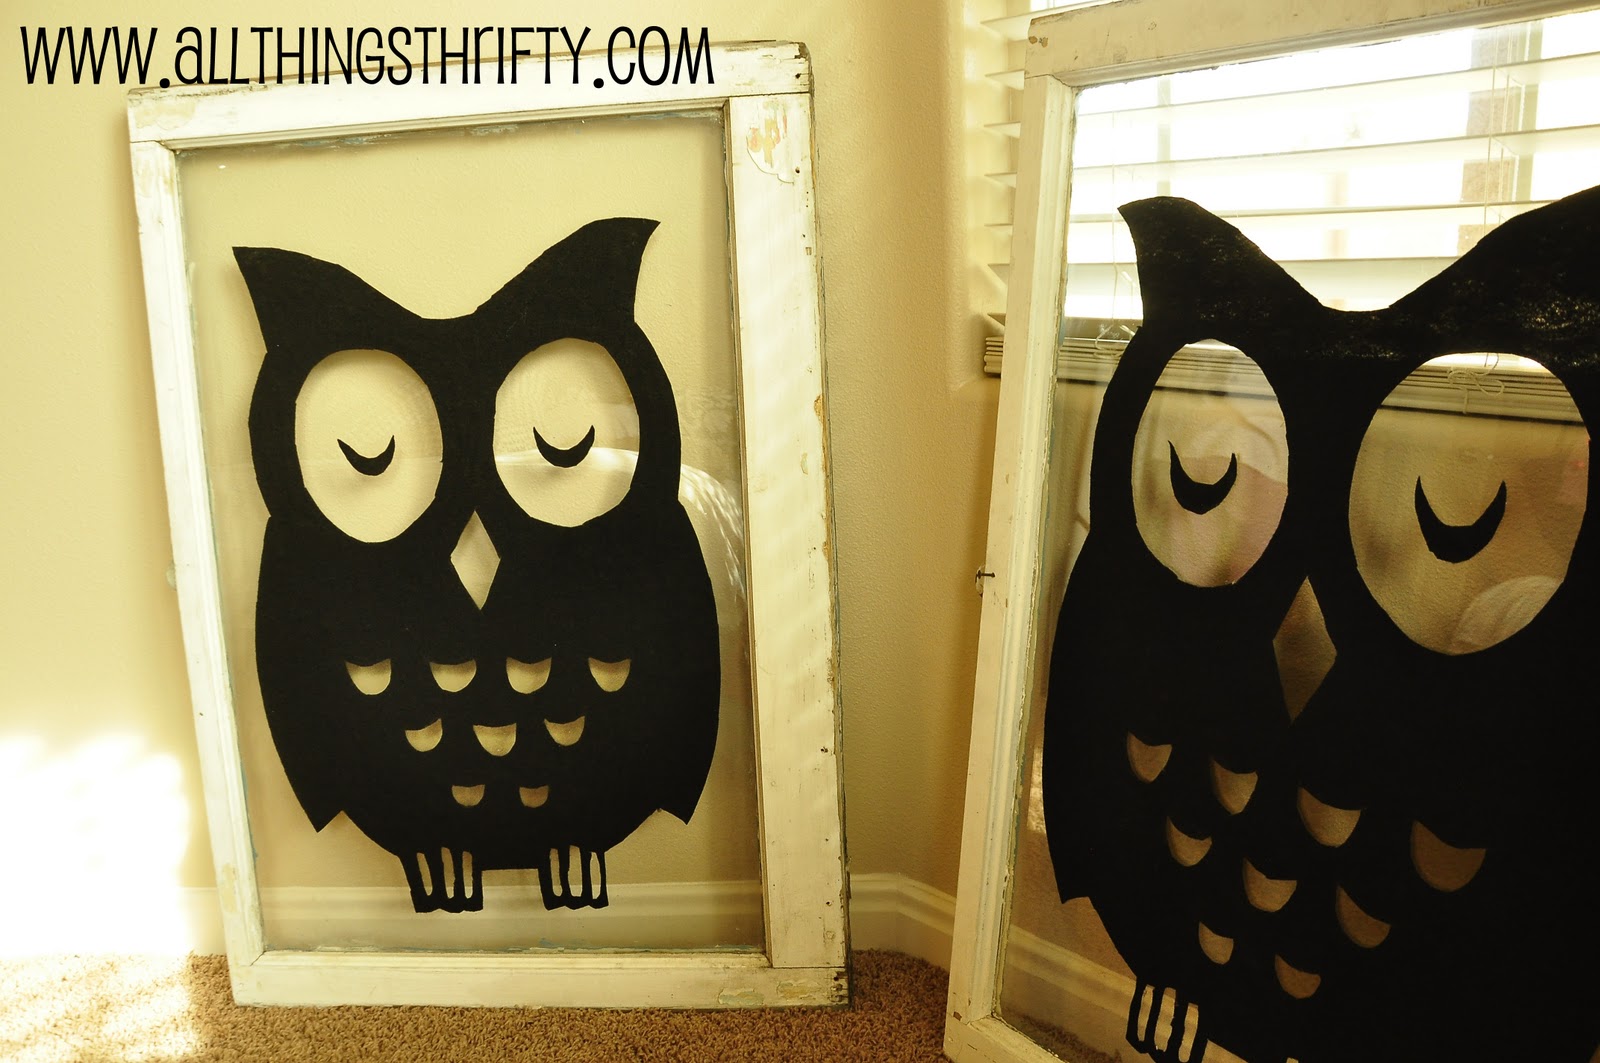 Nursery Decorating Ideas Part 4: Vintage Windows with Owls!